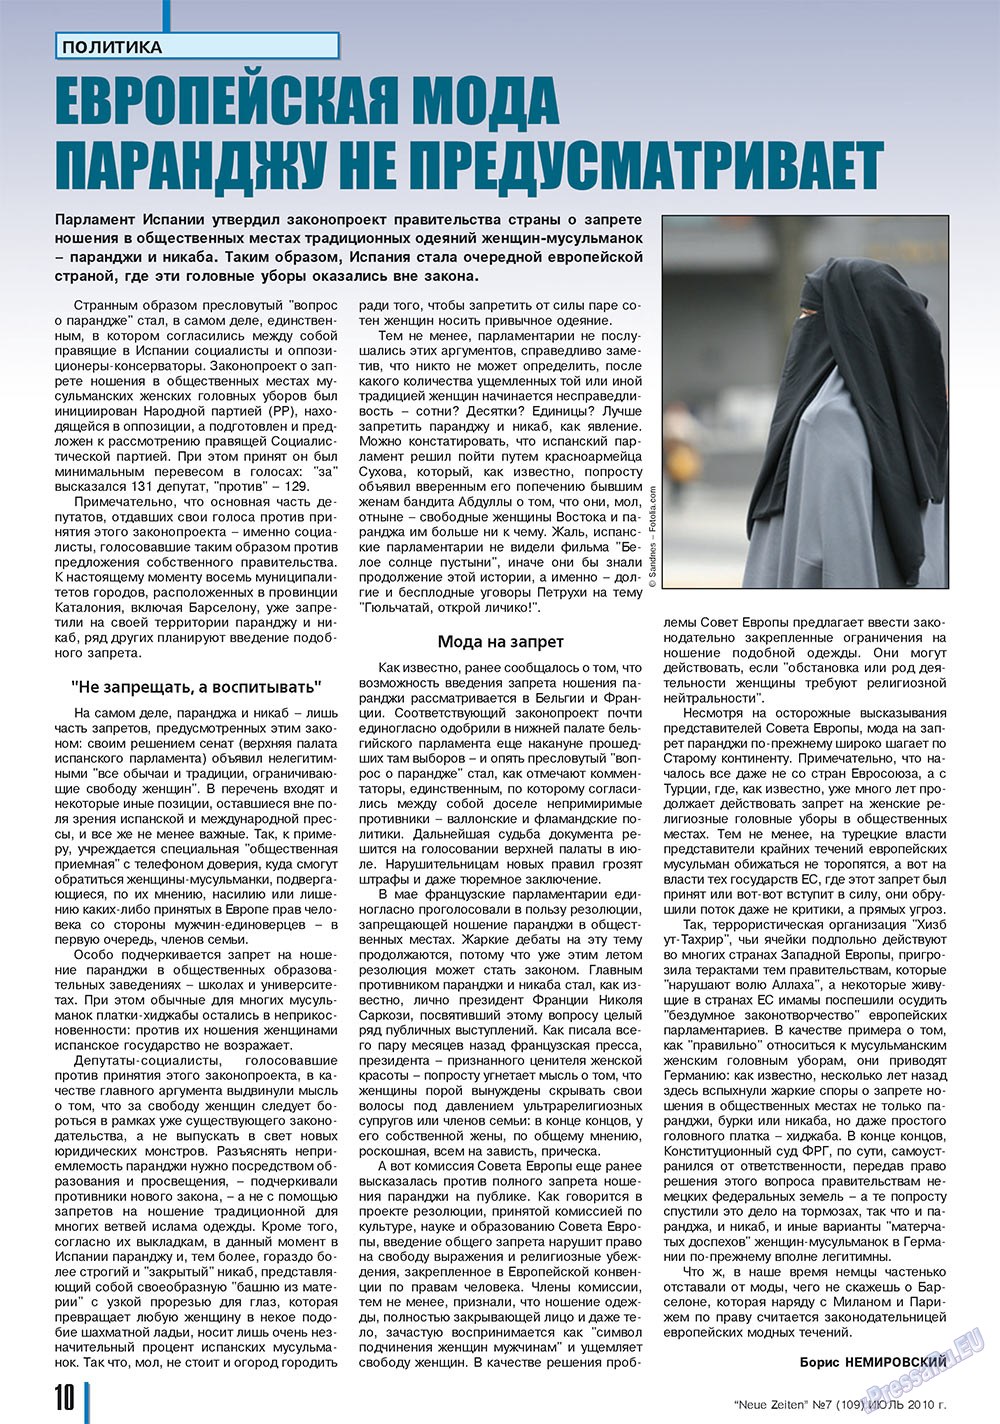 Neue Zeiten (журнал). 2010 год, номер 7, стр. 10